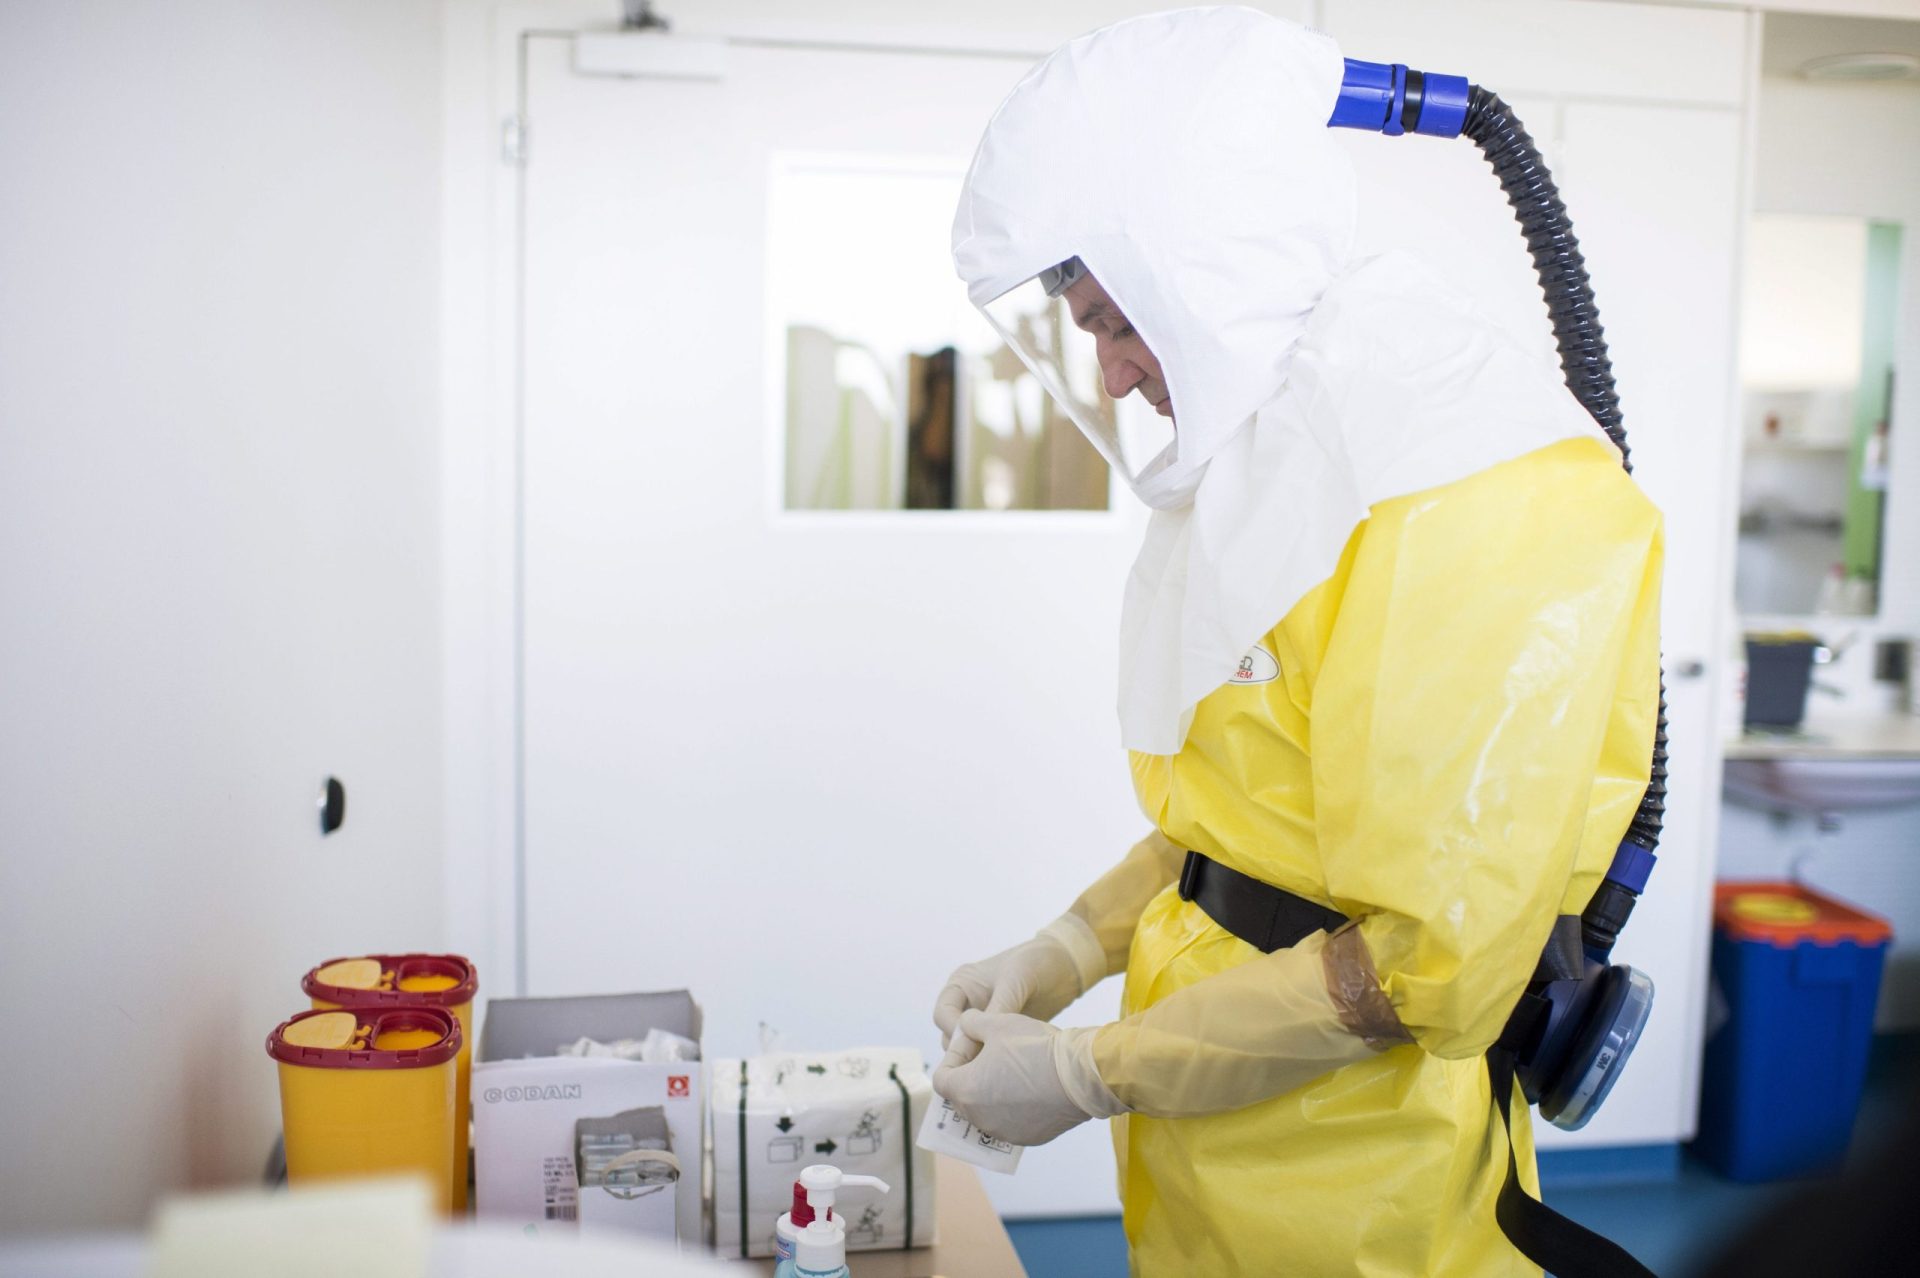 Auxiliar espanhola com carga viral de ébola ‘quase negativa’